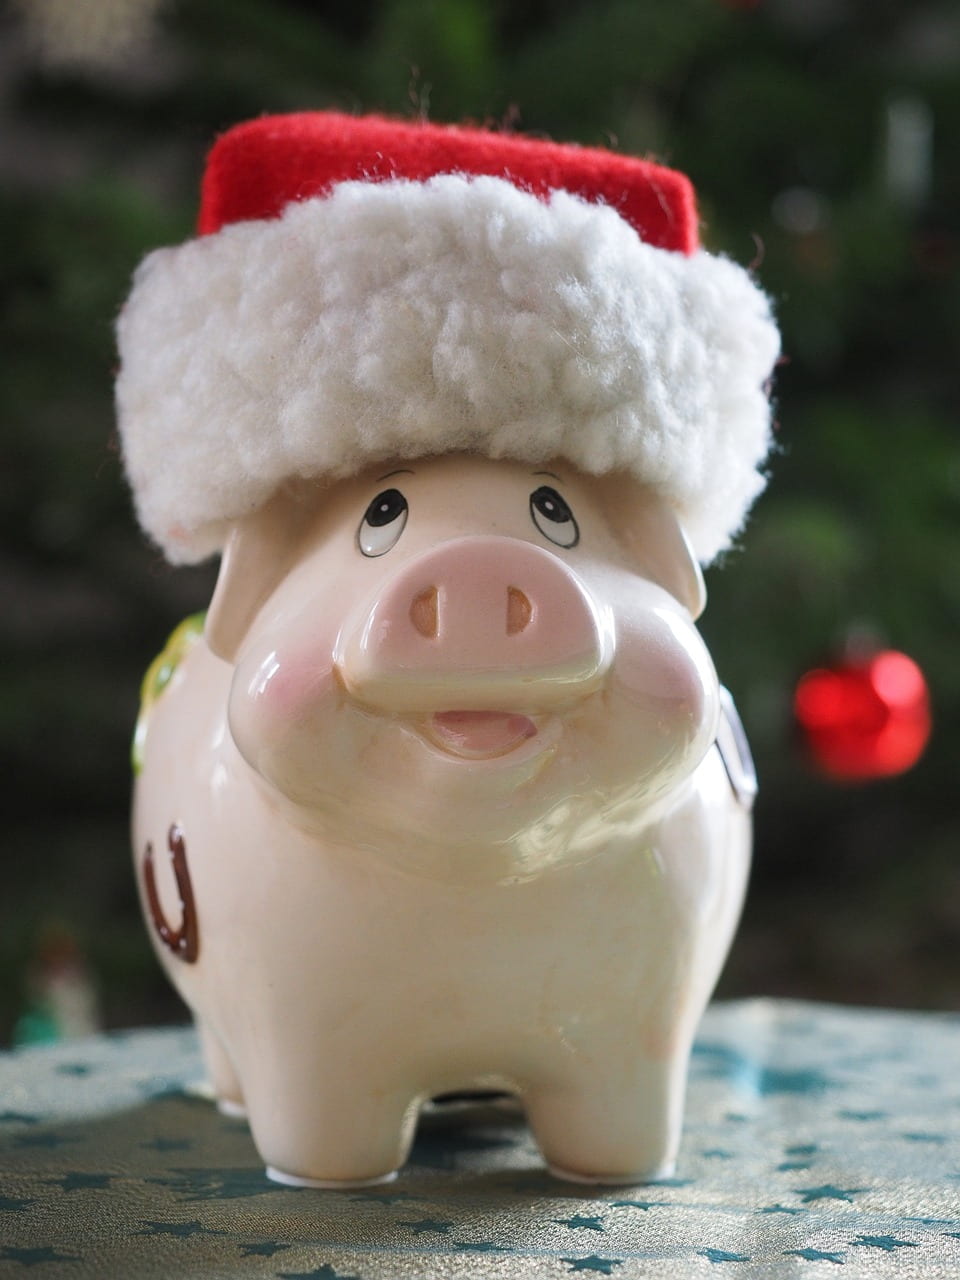 An image of a piggy bank wearing a Santa hat.